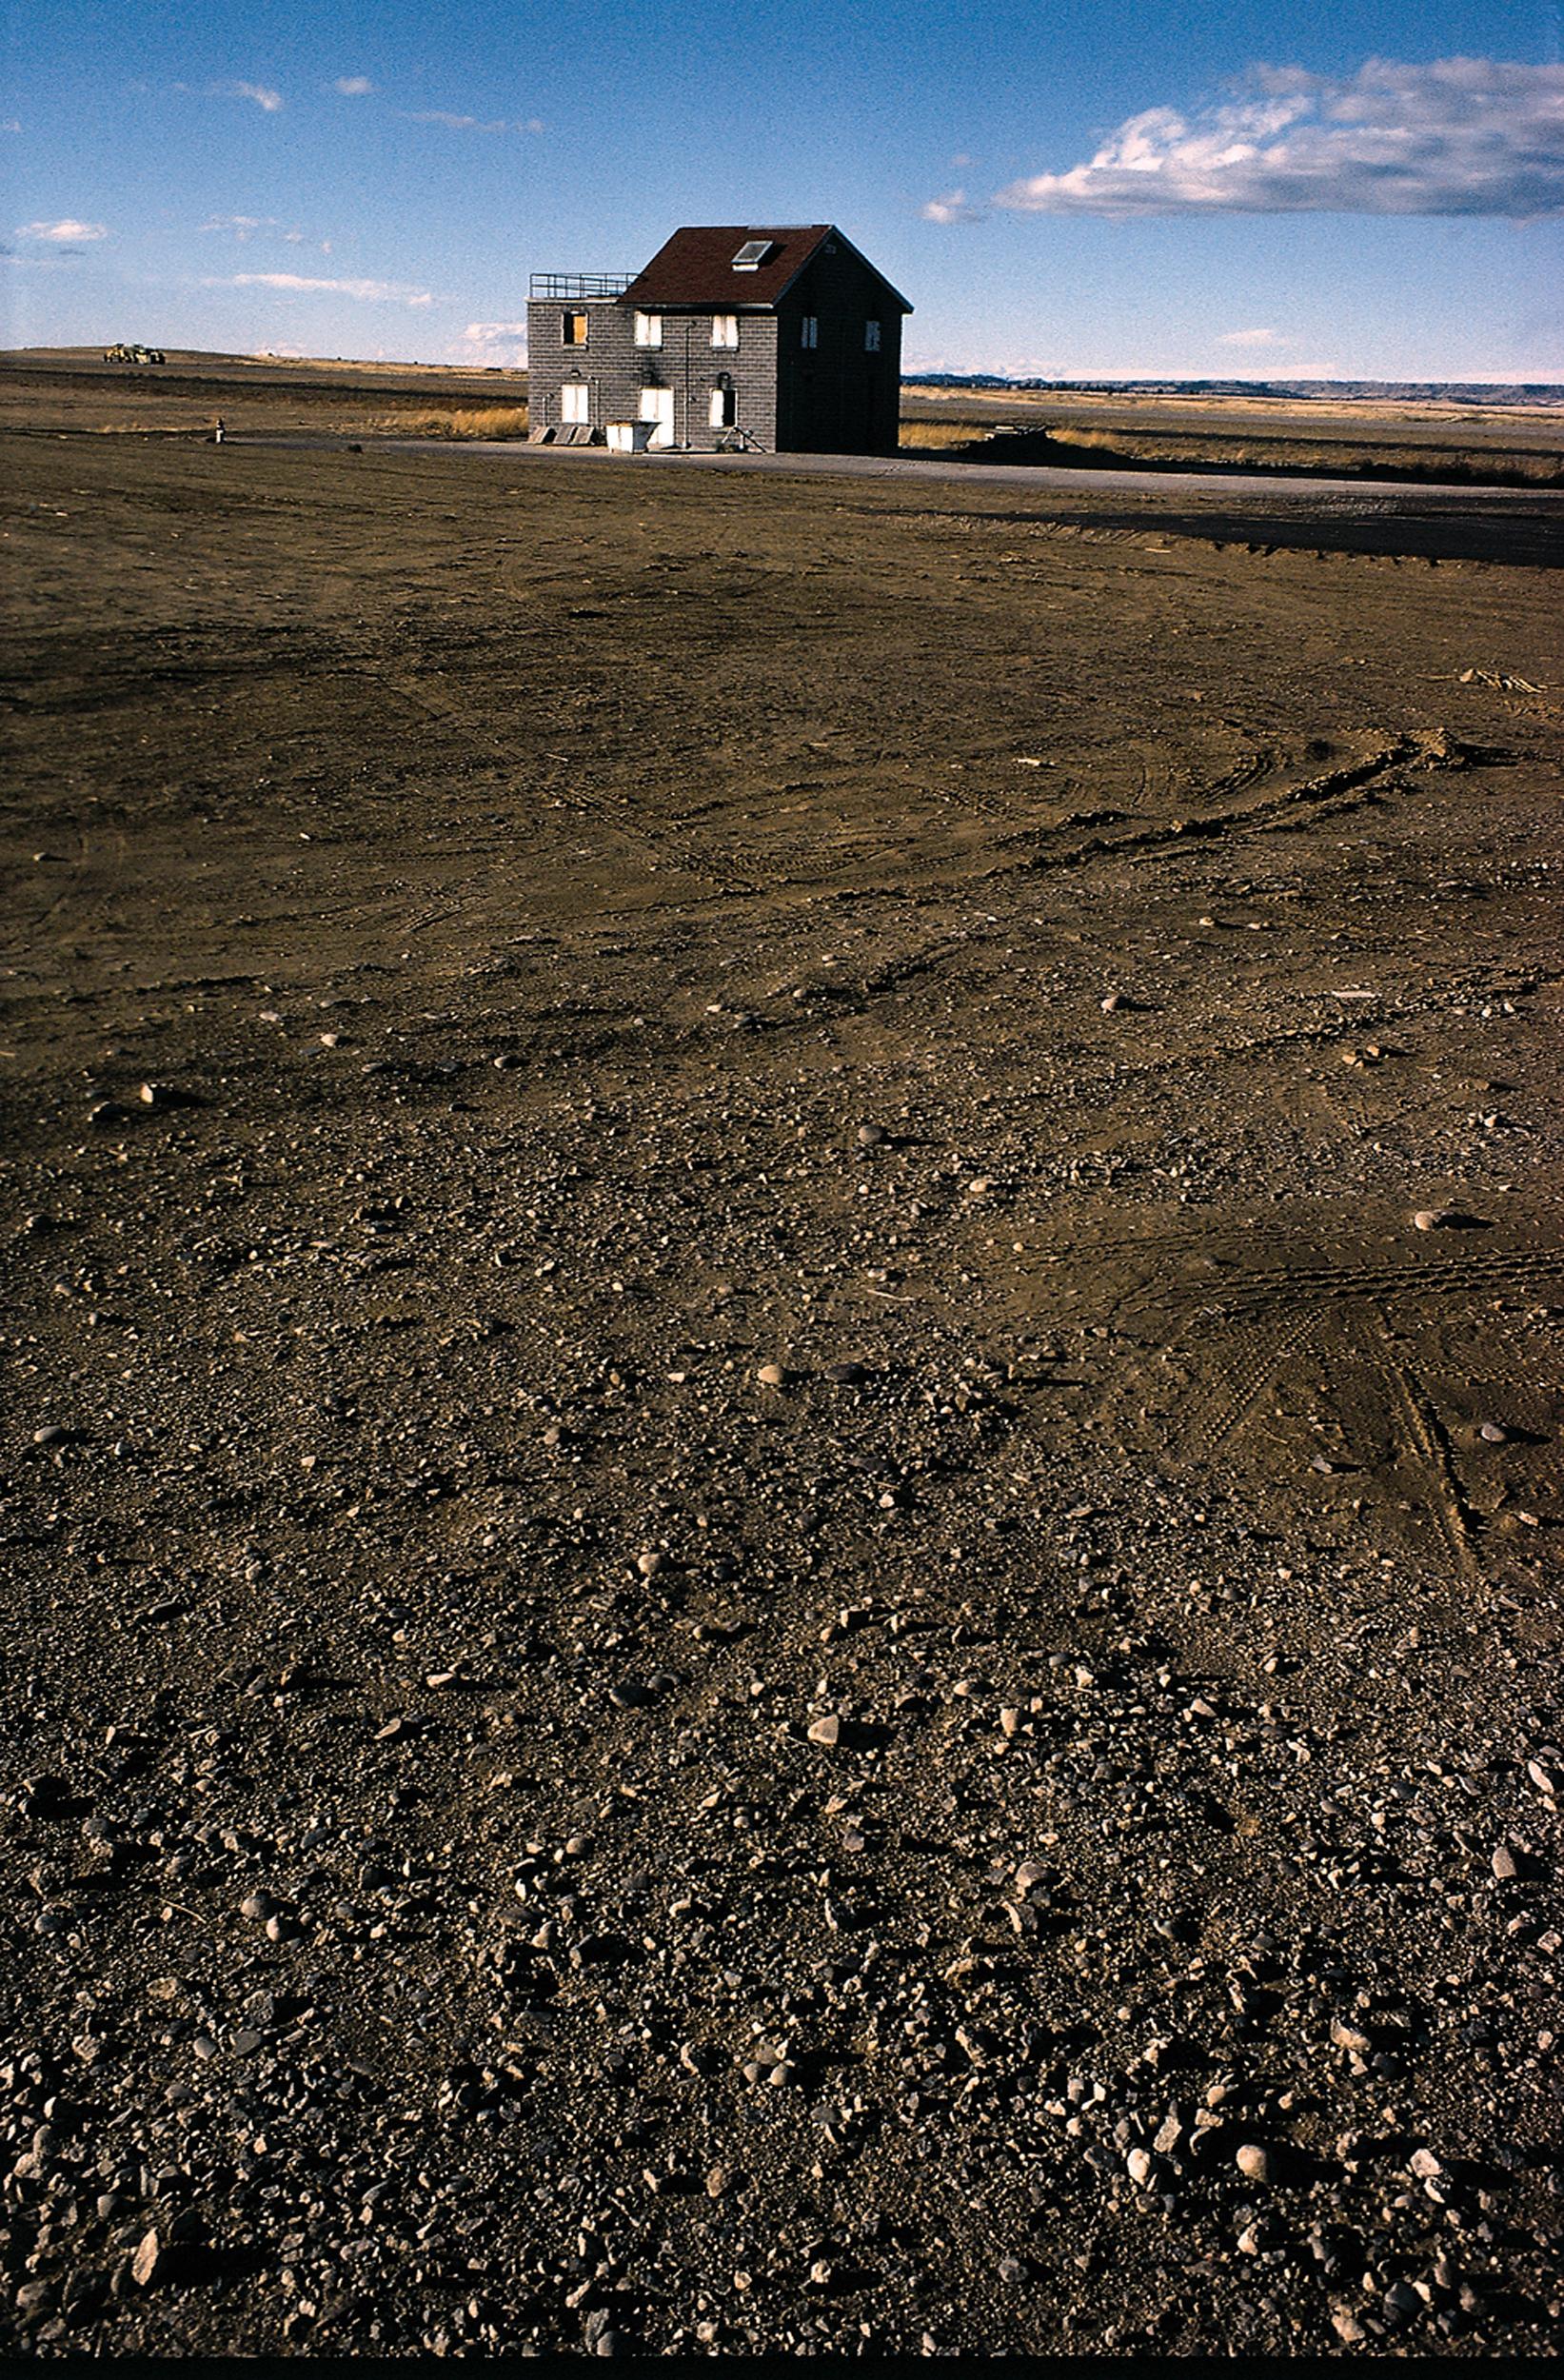 American Contemporary Photo by M. K. Yamaoka - Lone House, Billings Montana